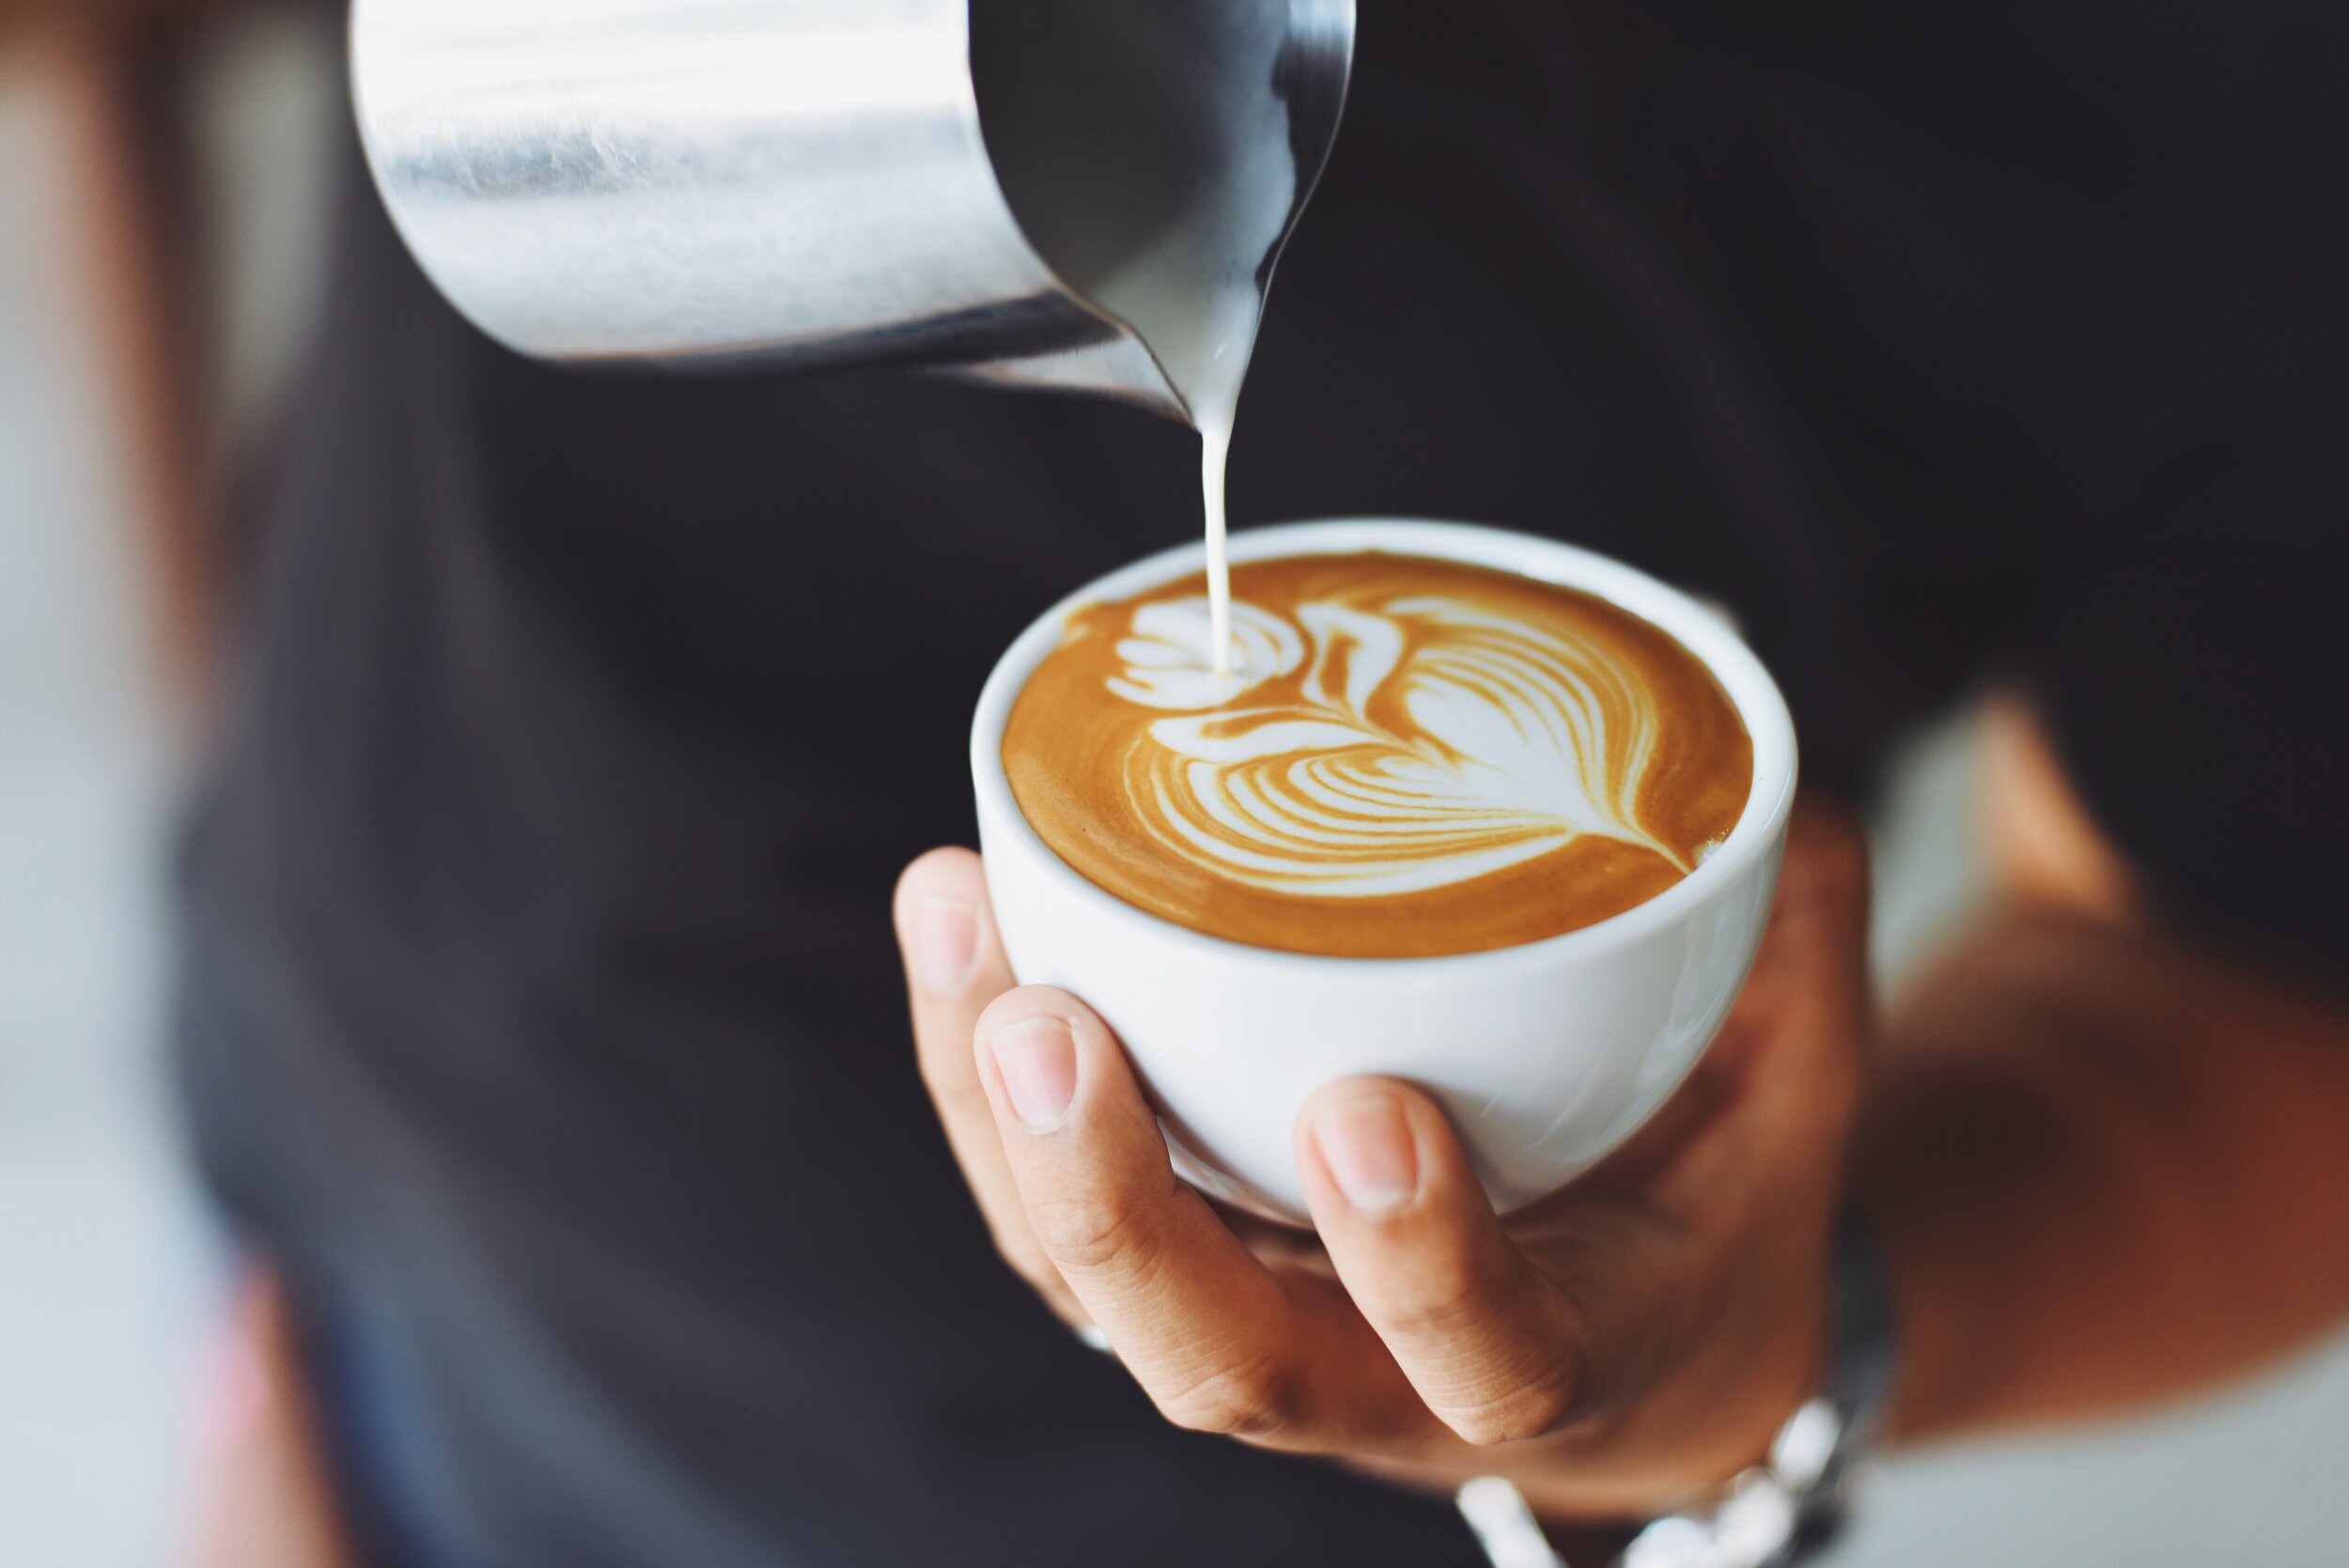 latte art training cup